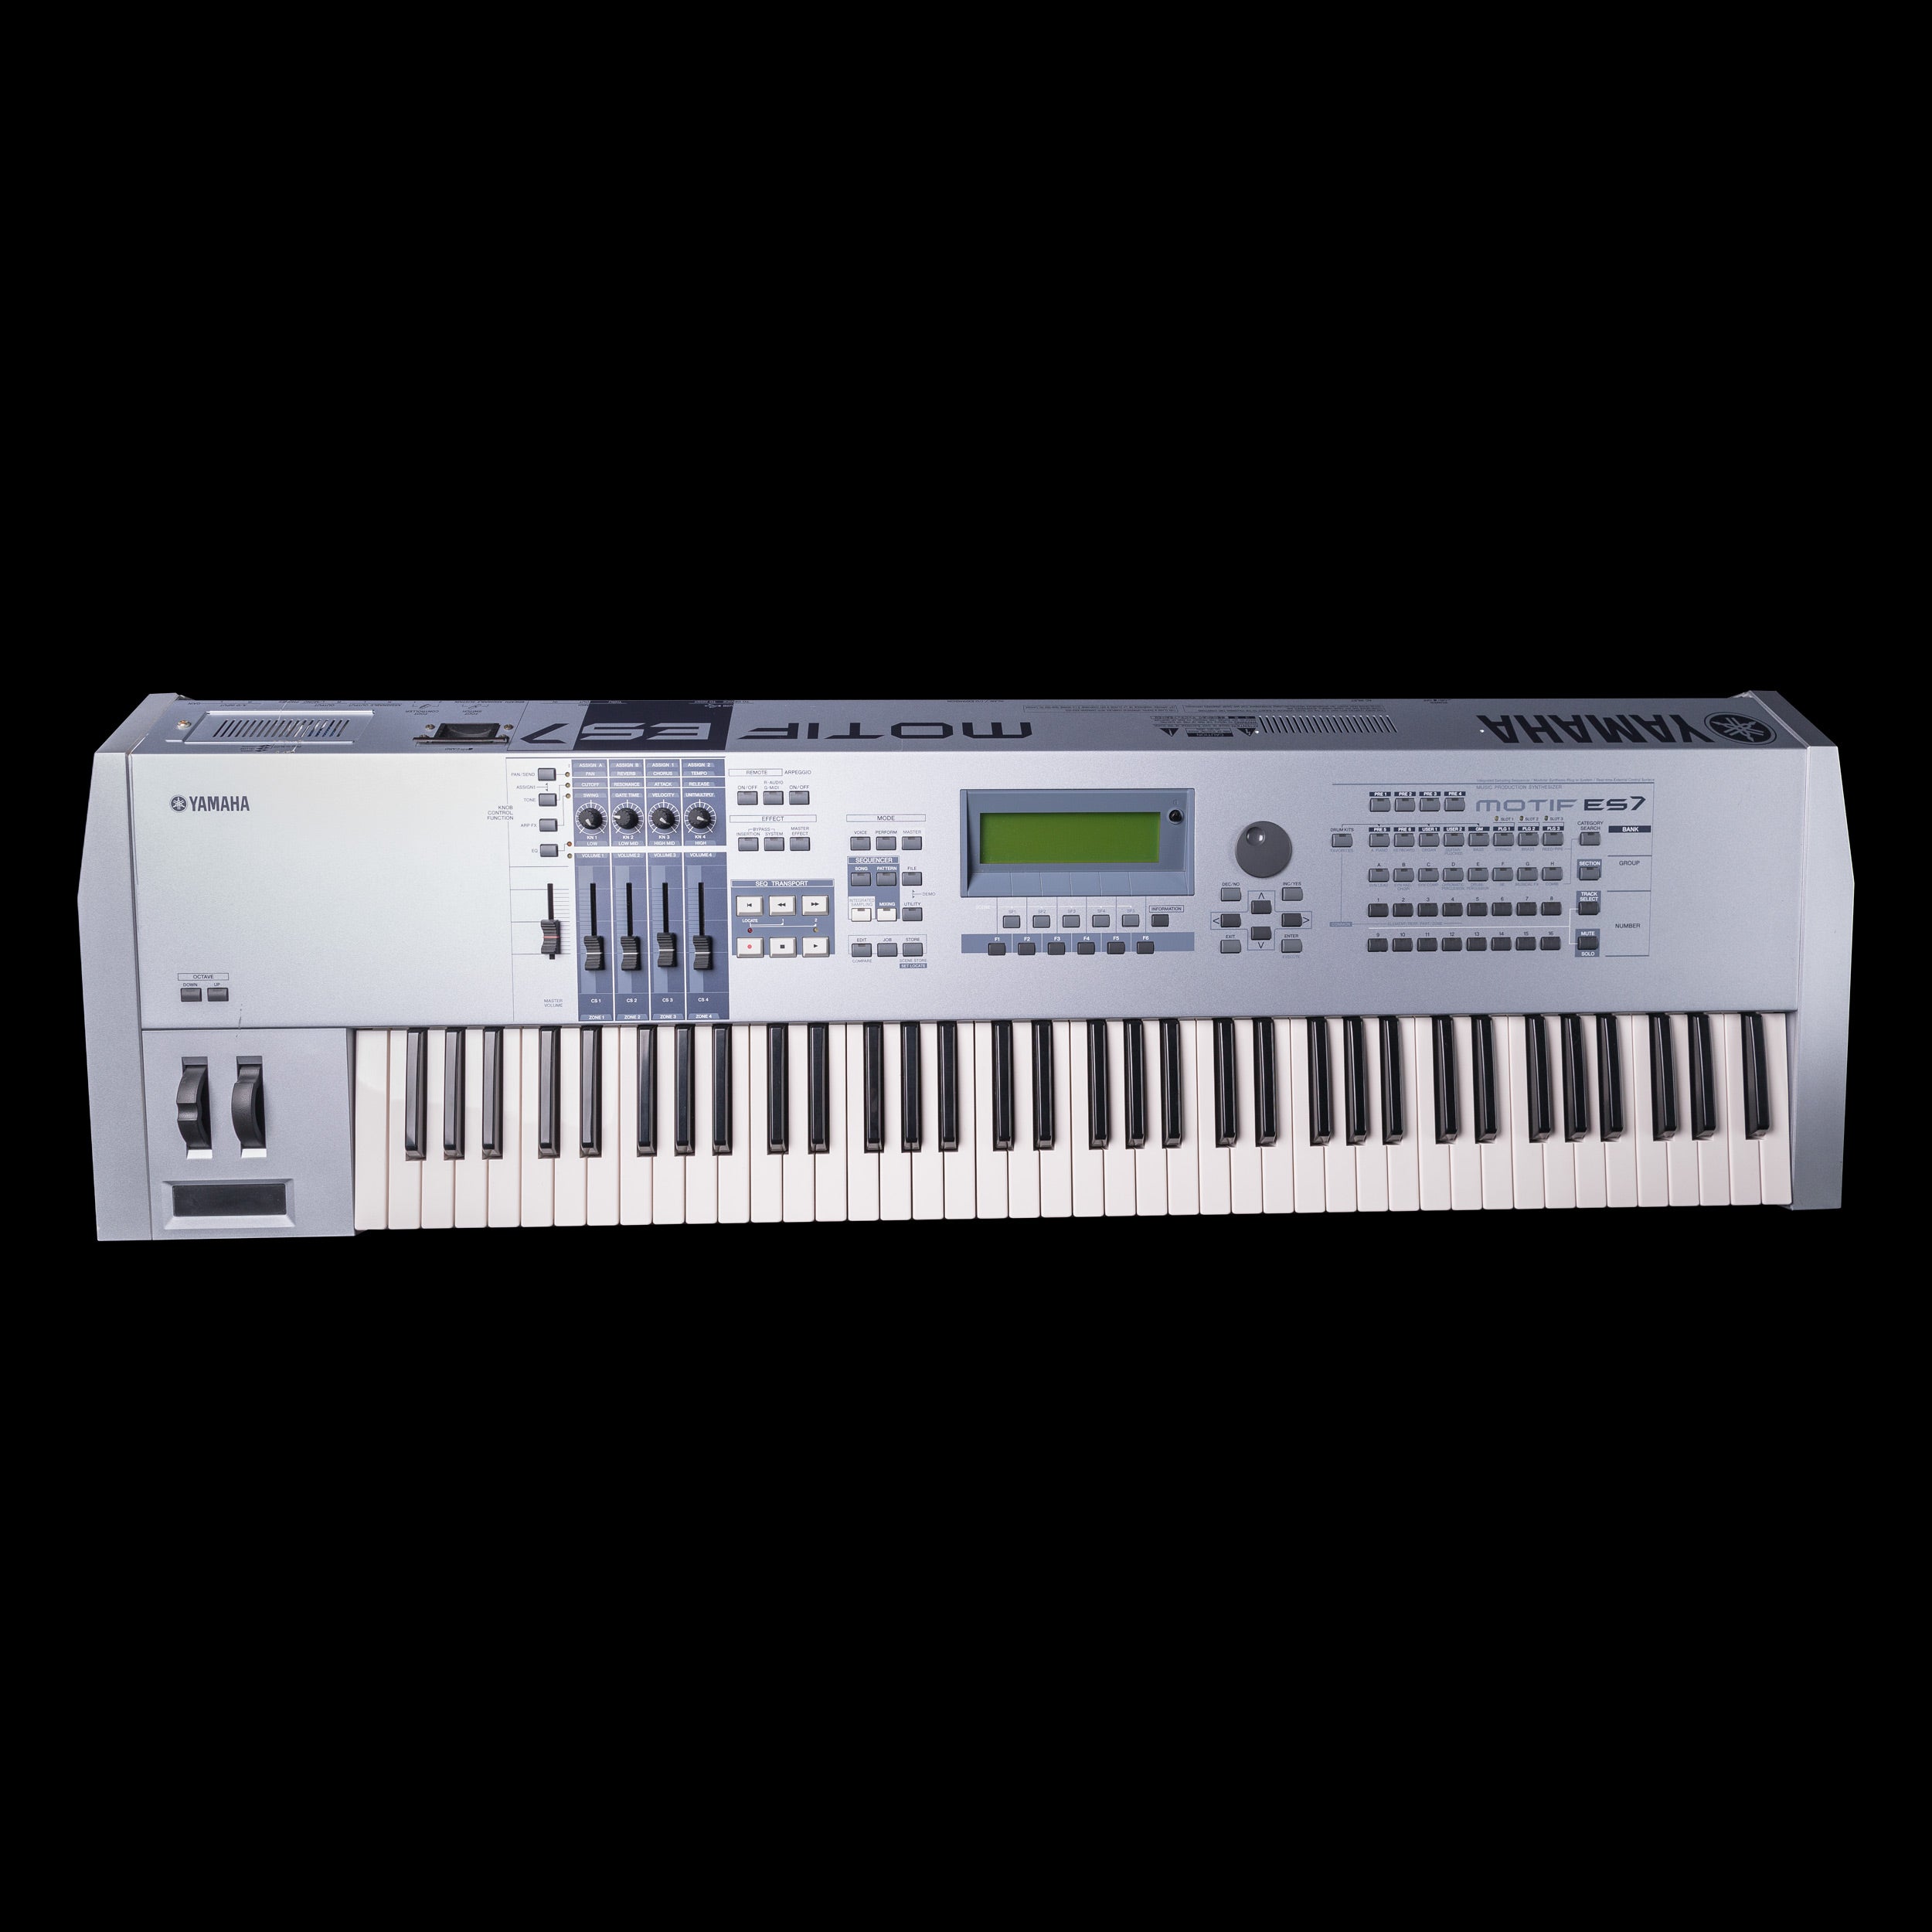 Yamaha Motif ES7 Keyboard 76-Key Music Production